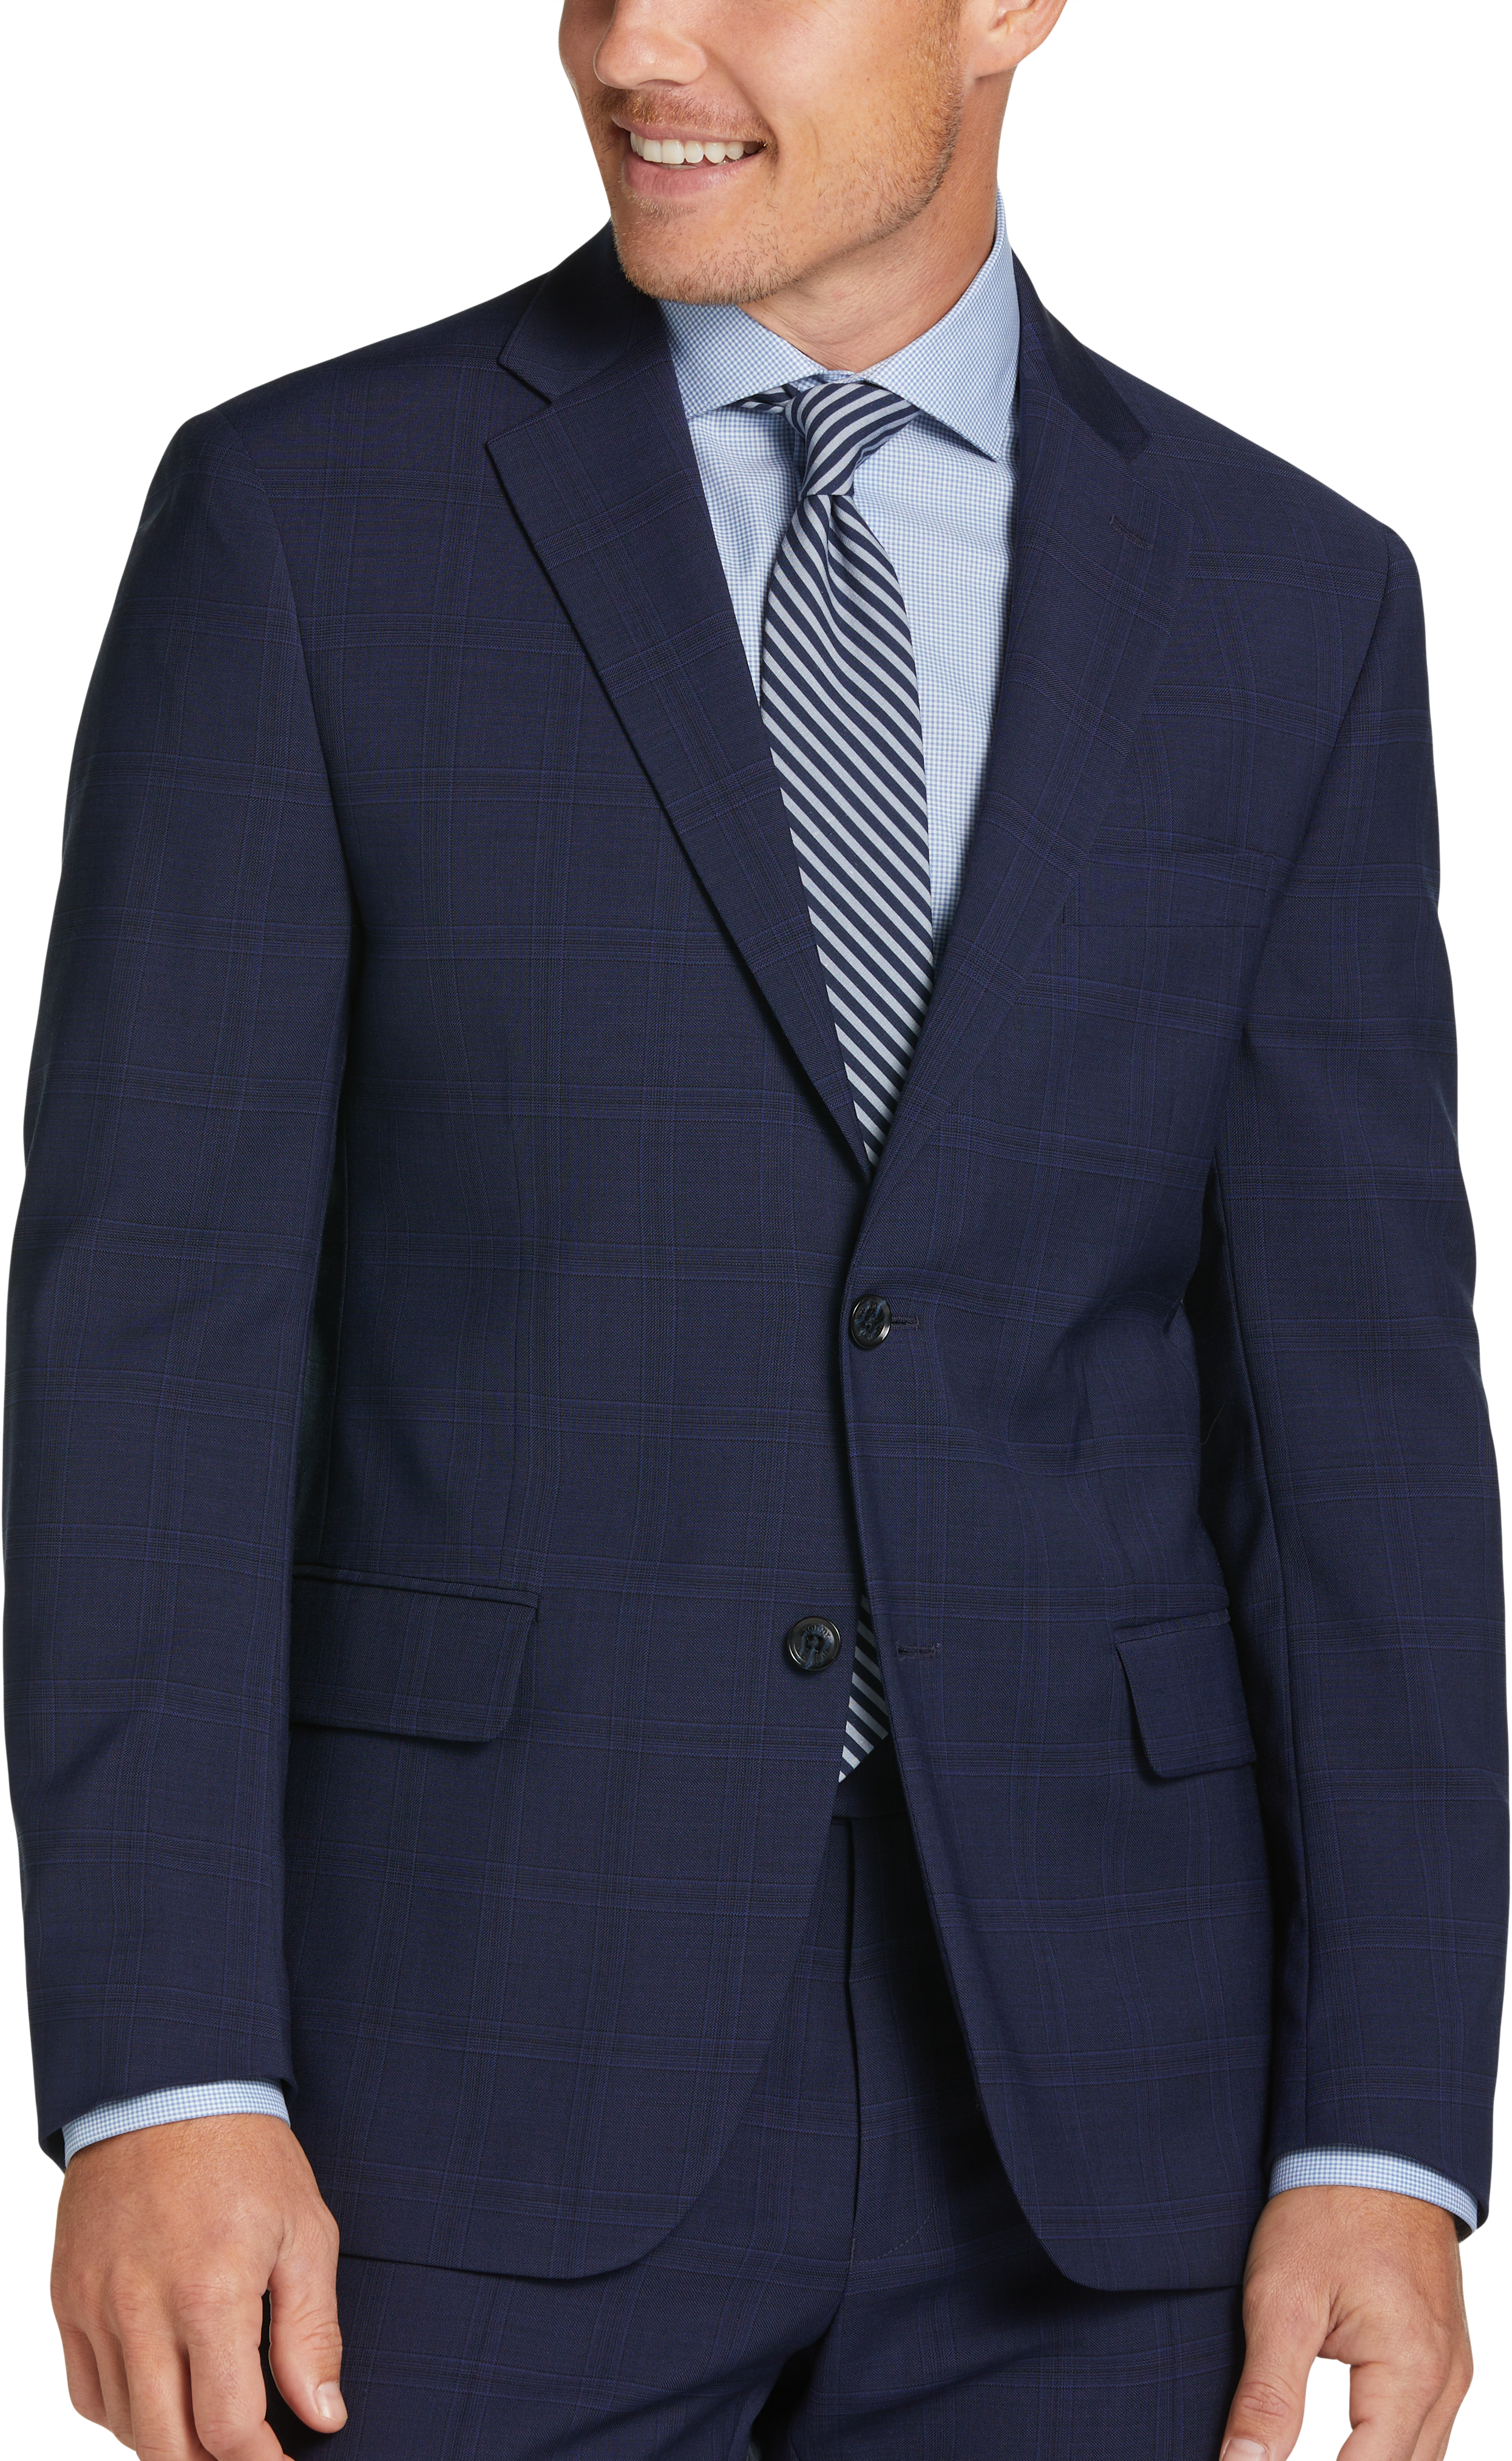 Give Rytmisk kyst Tommy Hilfiger Modern Fit Suit, Blue Plaid - Men's Sale | Men's Wearhouse